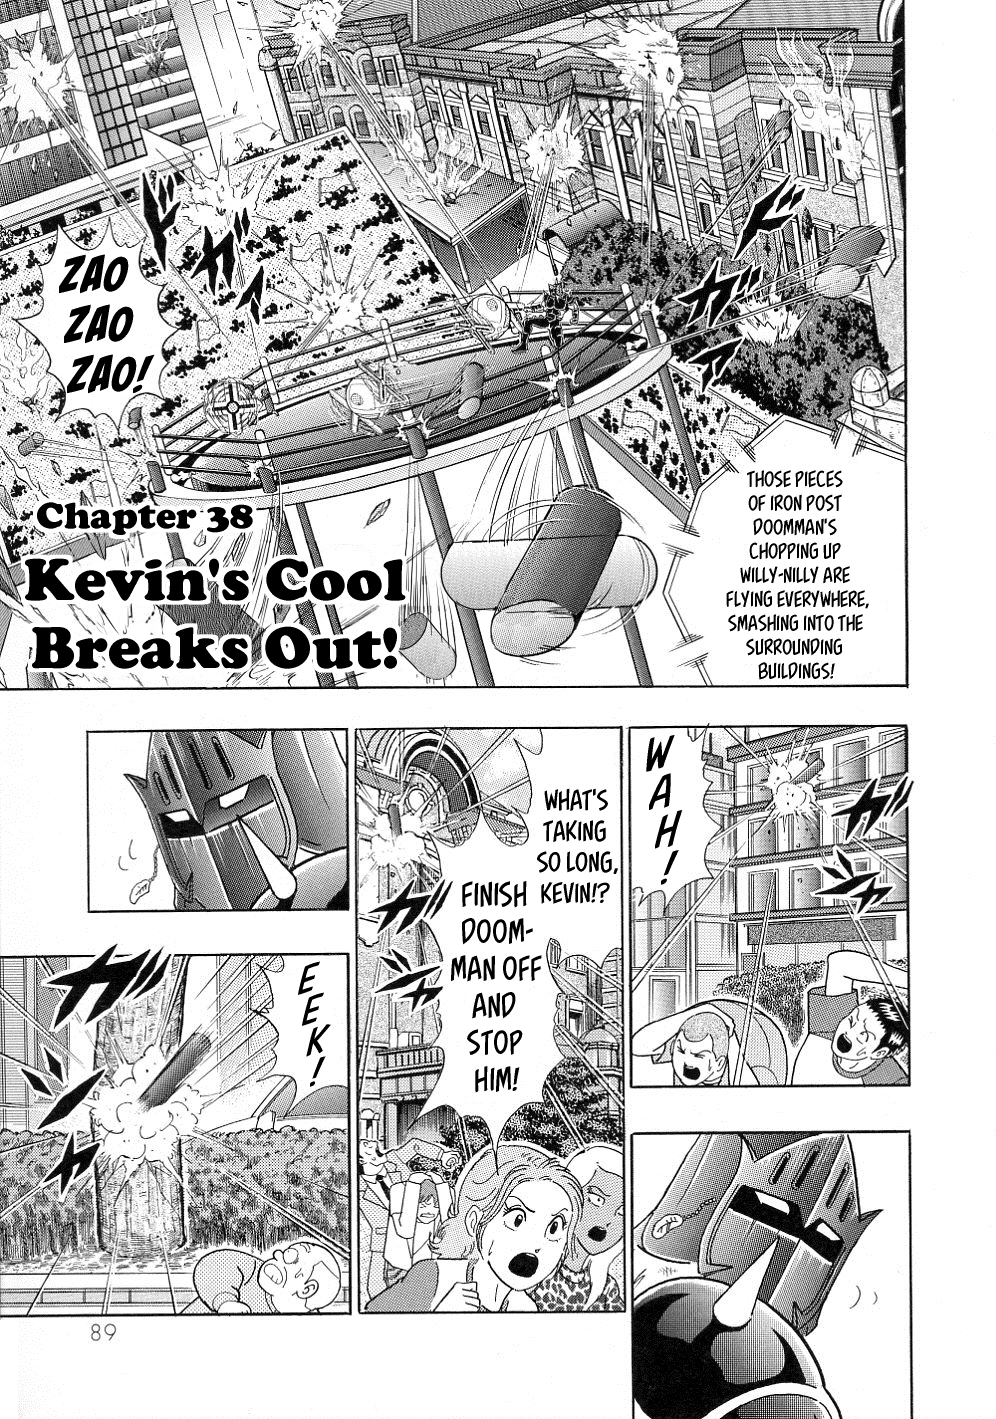 Kinnikuman II Sei: All Choujin Daishingeki Vol. 3 Ch. 38 Kevin's Cool Breaks Out!